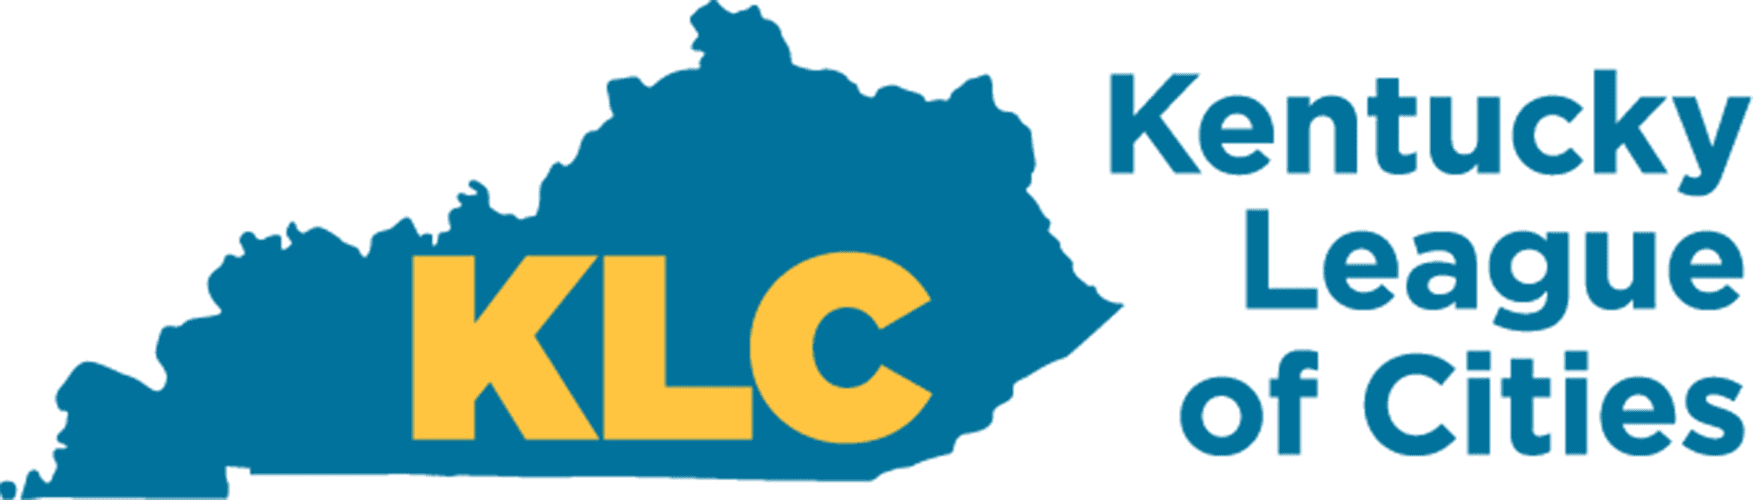 Kentucky League of Cities logo